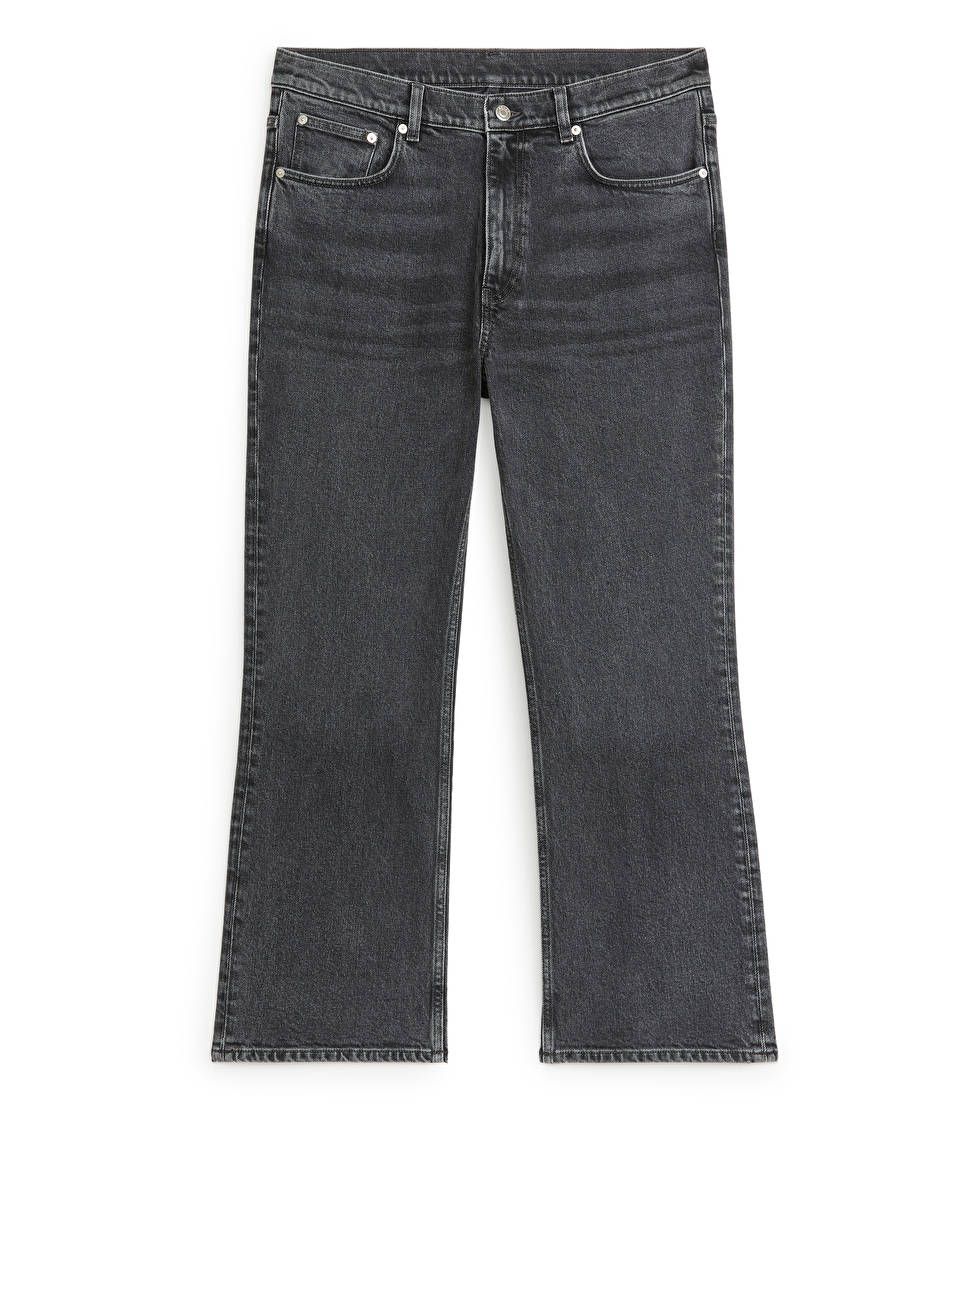 FERN CROPPED Flared Stretch Jeans | ARKET